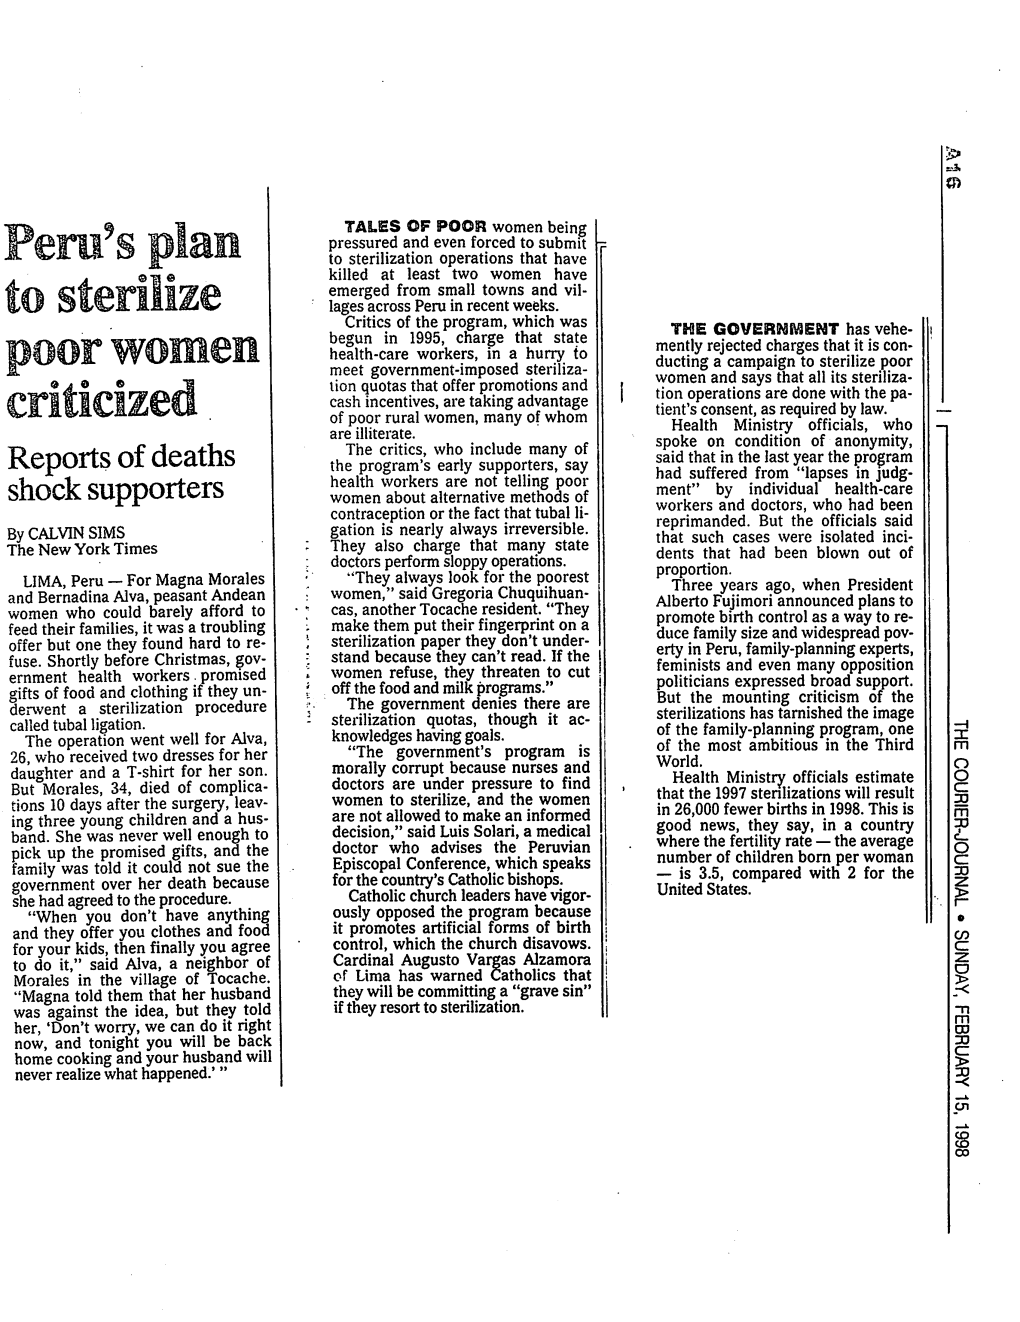 Peru's Plan to Sterilize Poor Women Criticized